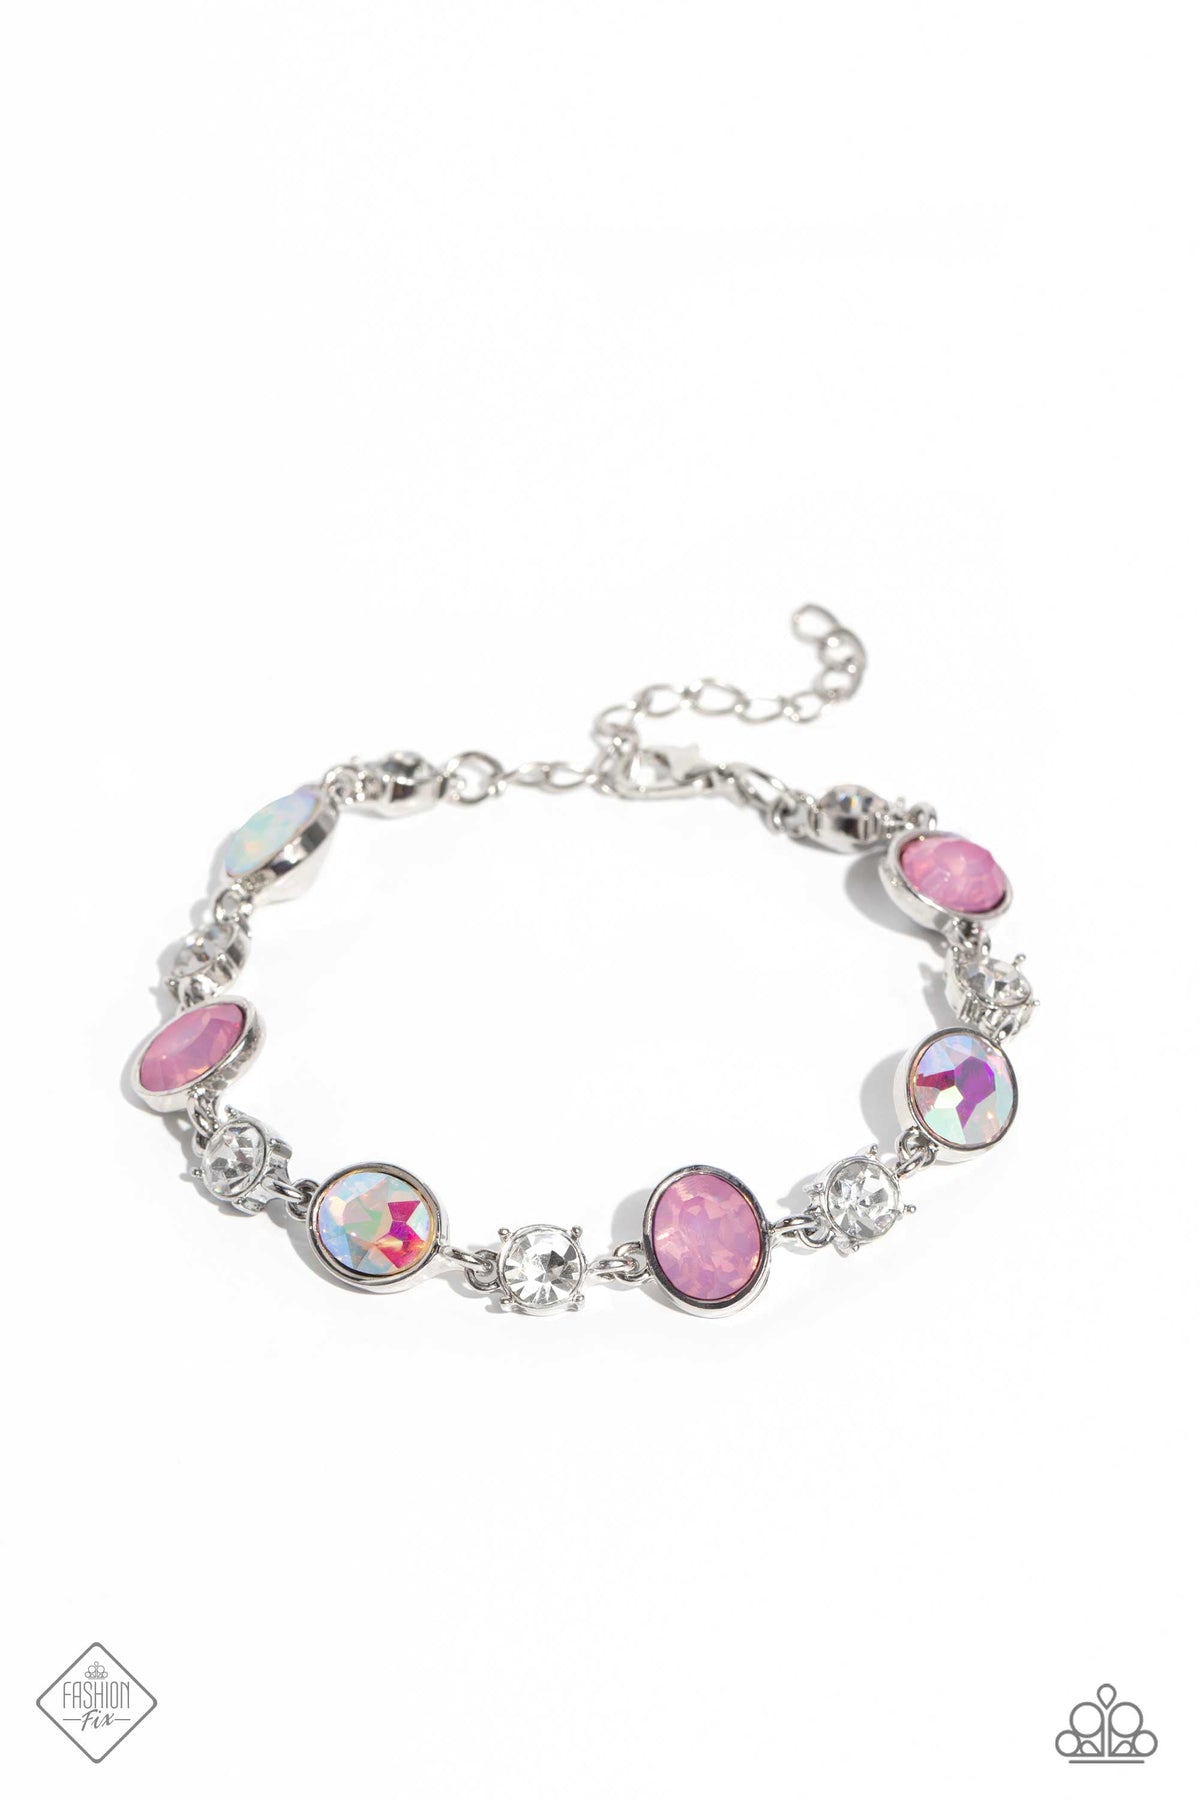 Ethereal Empathy Multi &amp; Pink Rhinestone Bracelet - Paparazzi Accessories- lightbox - CarasShop.com - $5 Jewelry by Cara Jewels